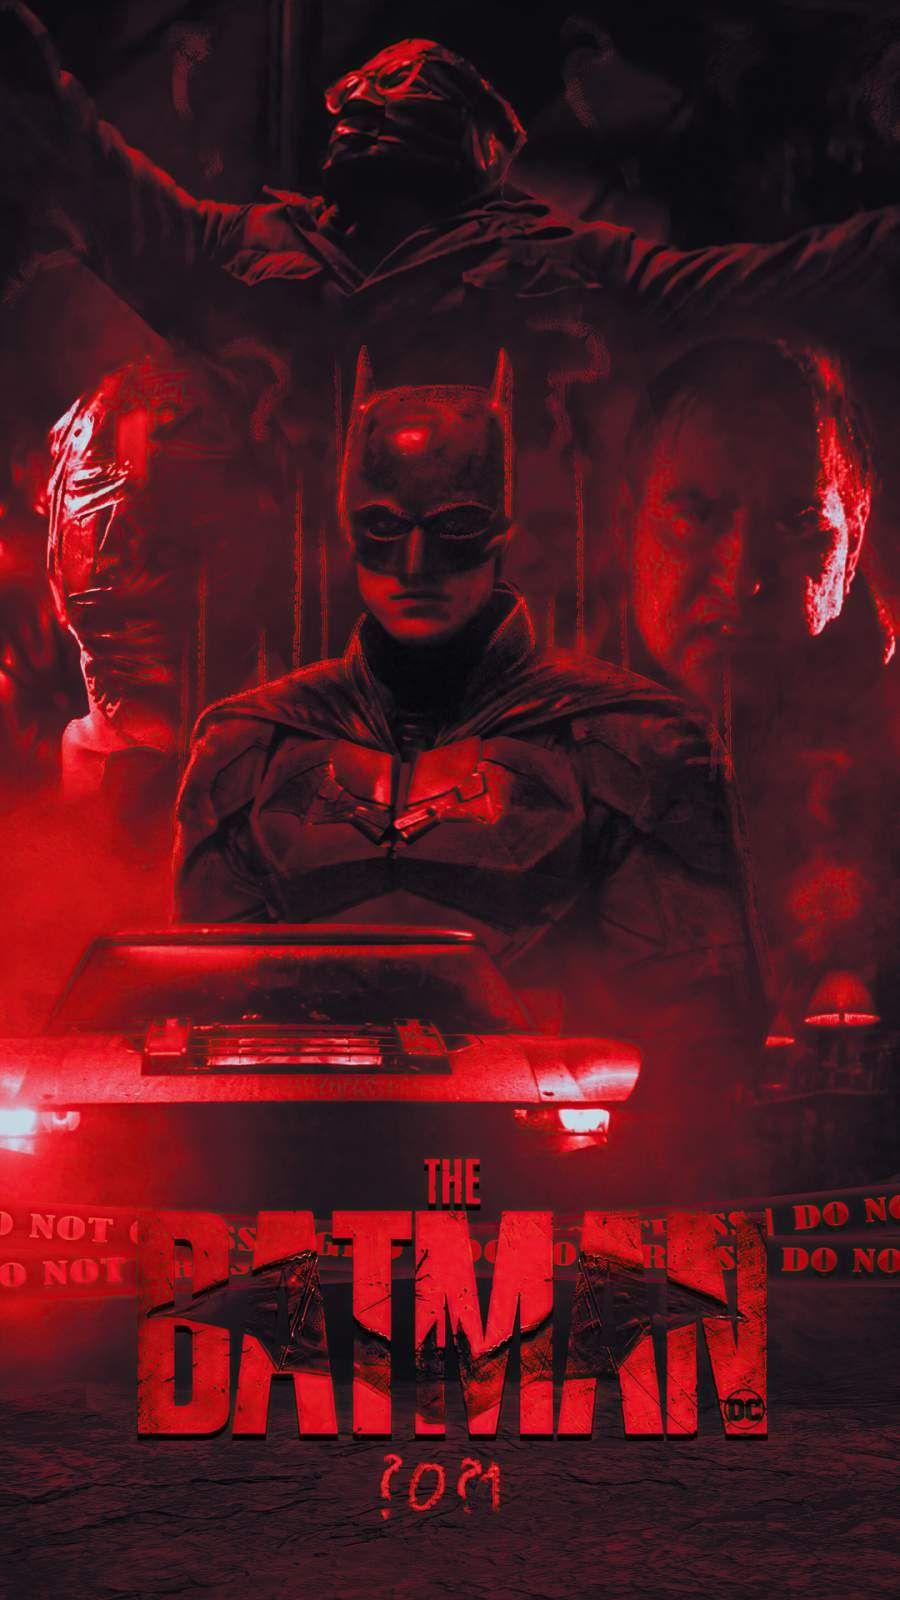 The Batman Poster IPhone Wallpaper  IPhone Wallpapers  iPhone Wallpapers